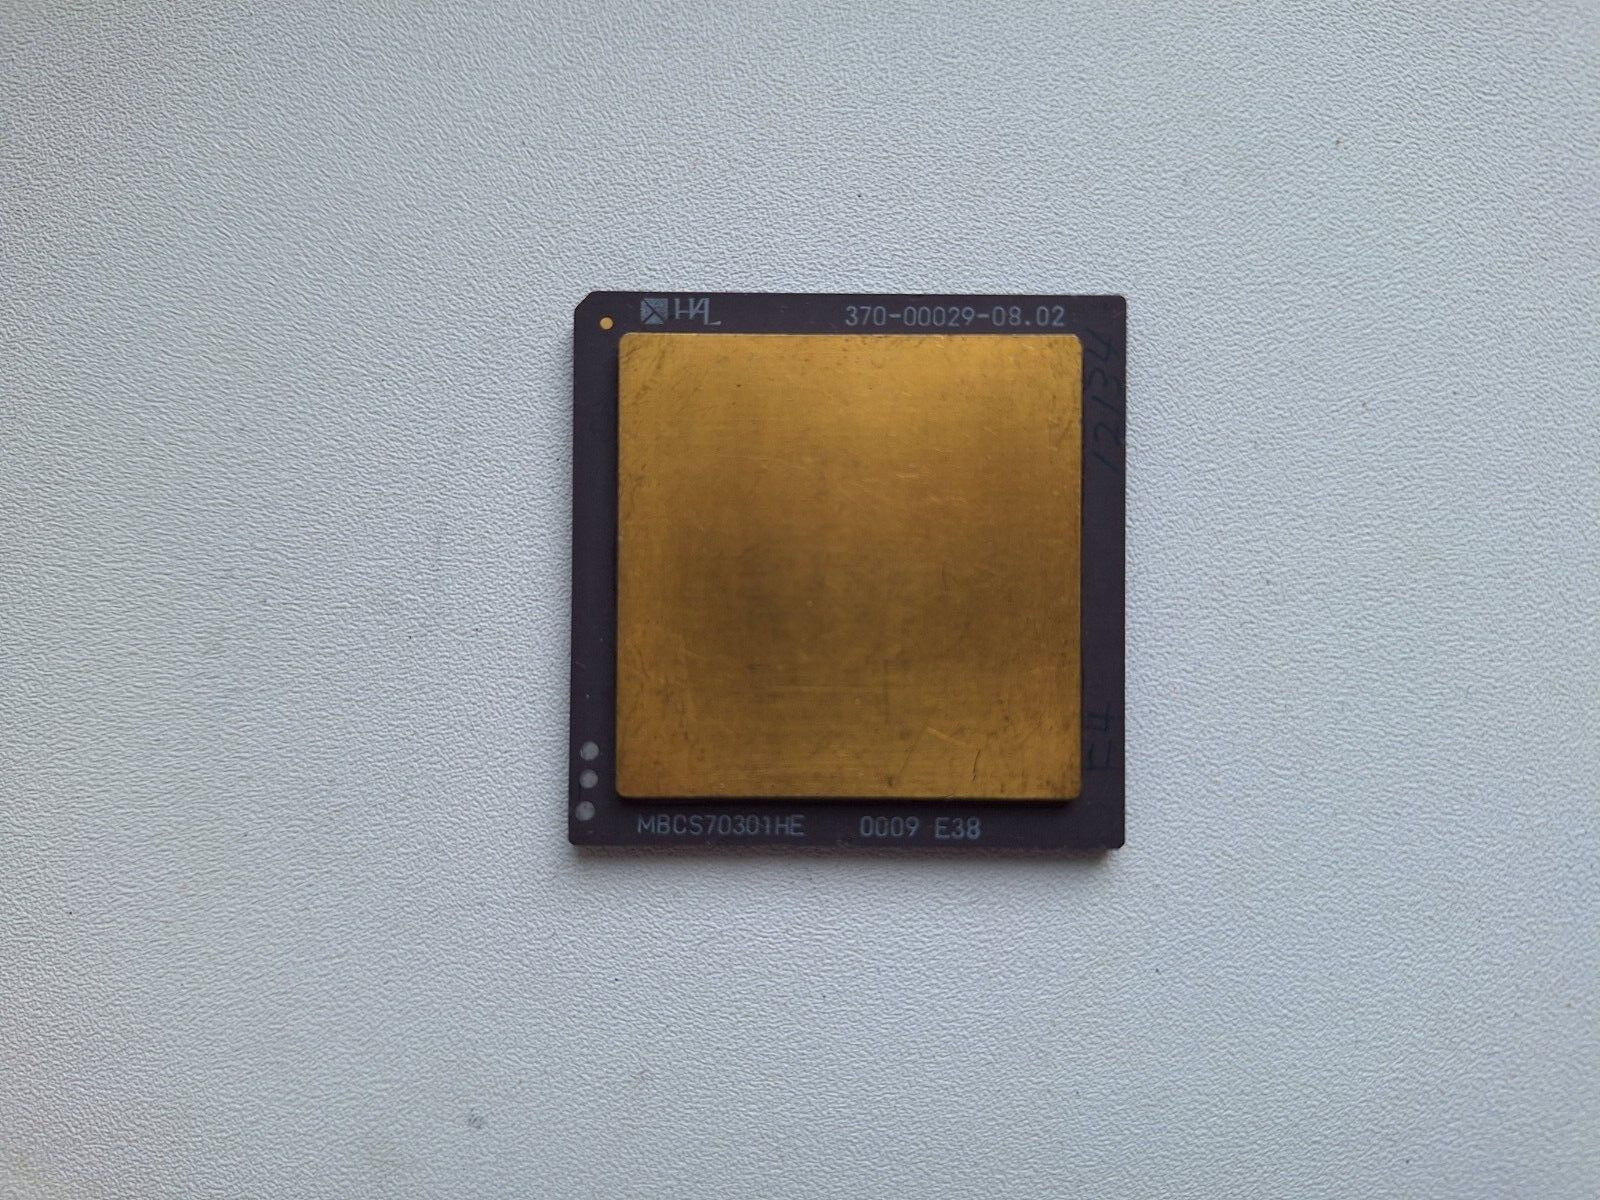 HAL Fujitsu MBCS70301HE 330MHz Sparc64-III/GP CPU very rare vintage CPU GOLD